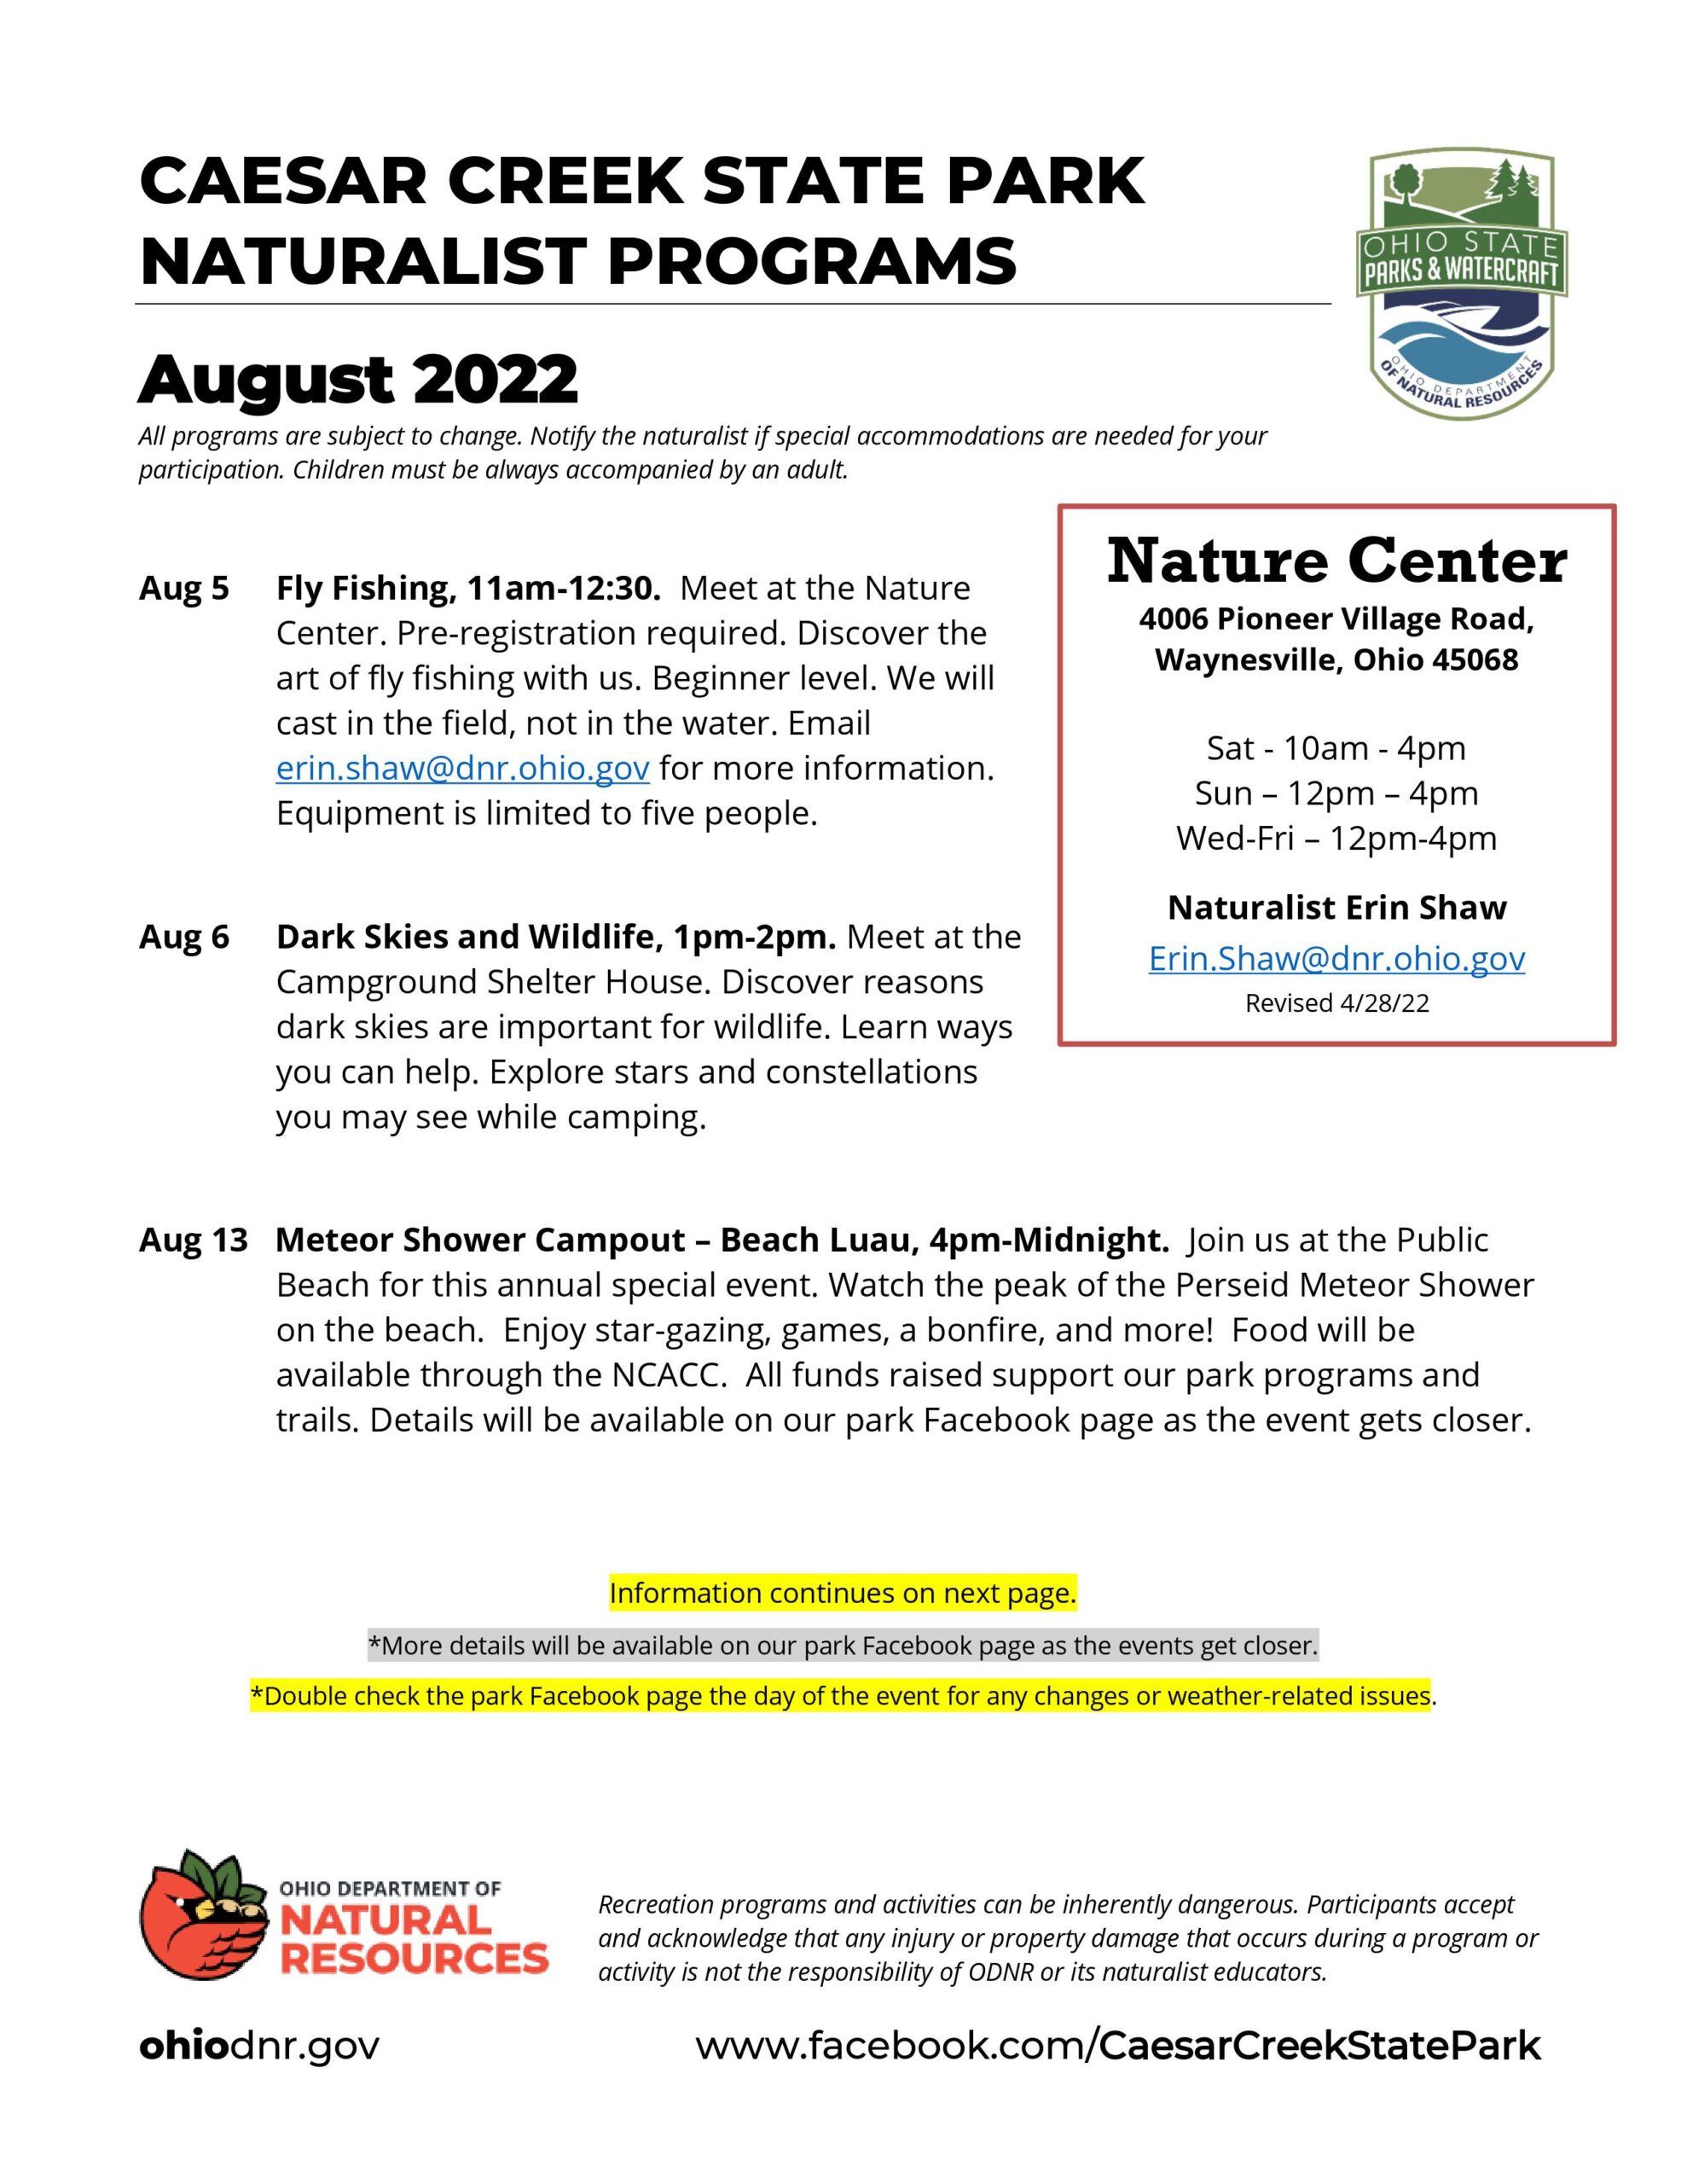 August 2022 Programs1